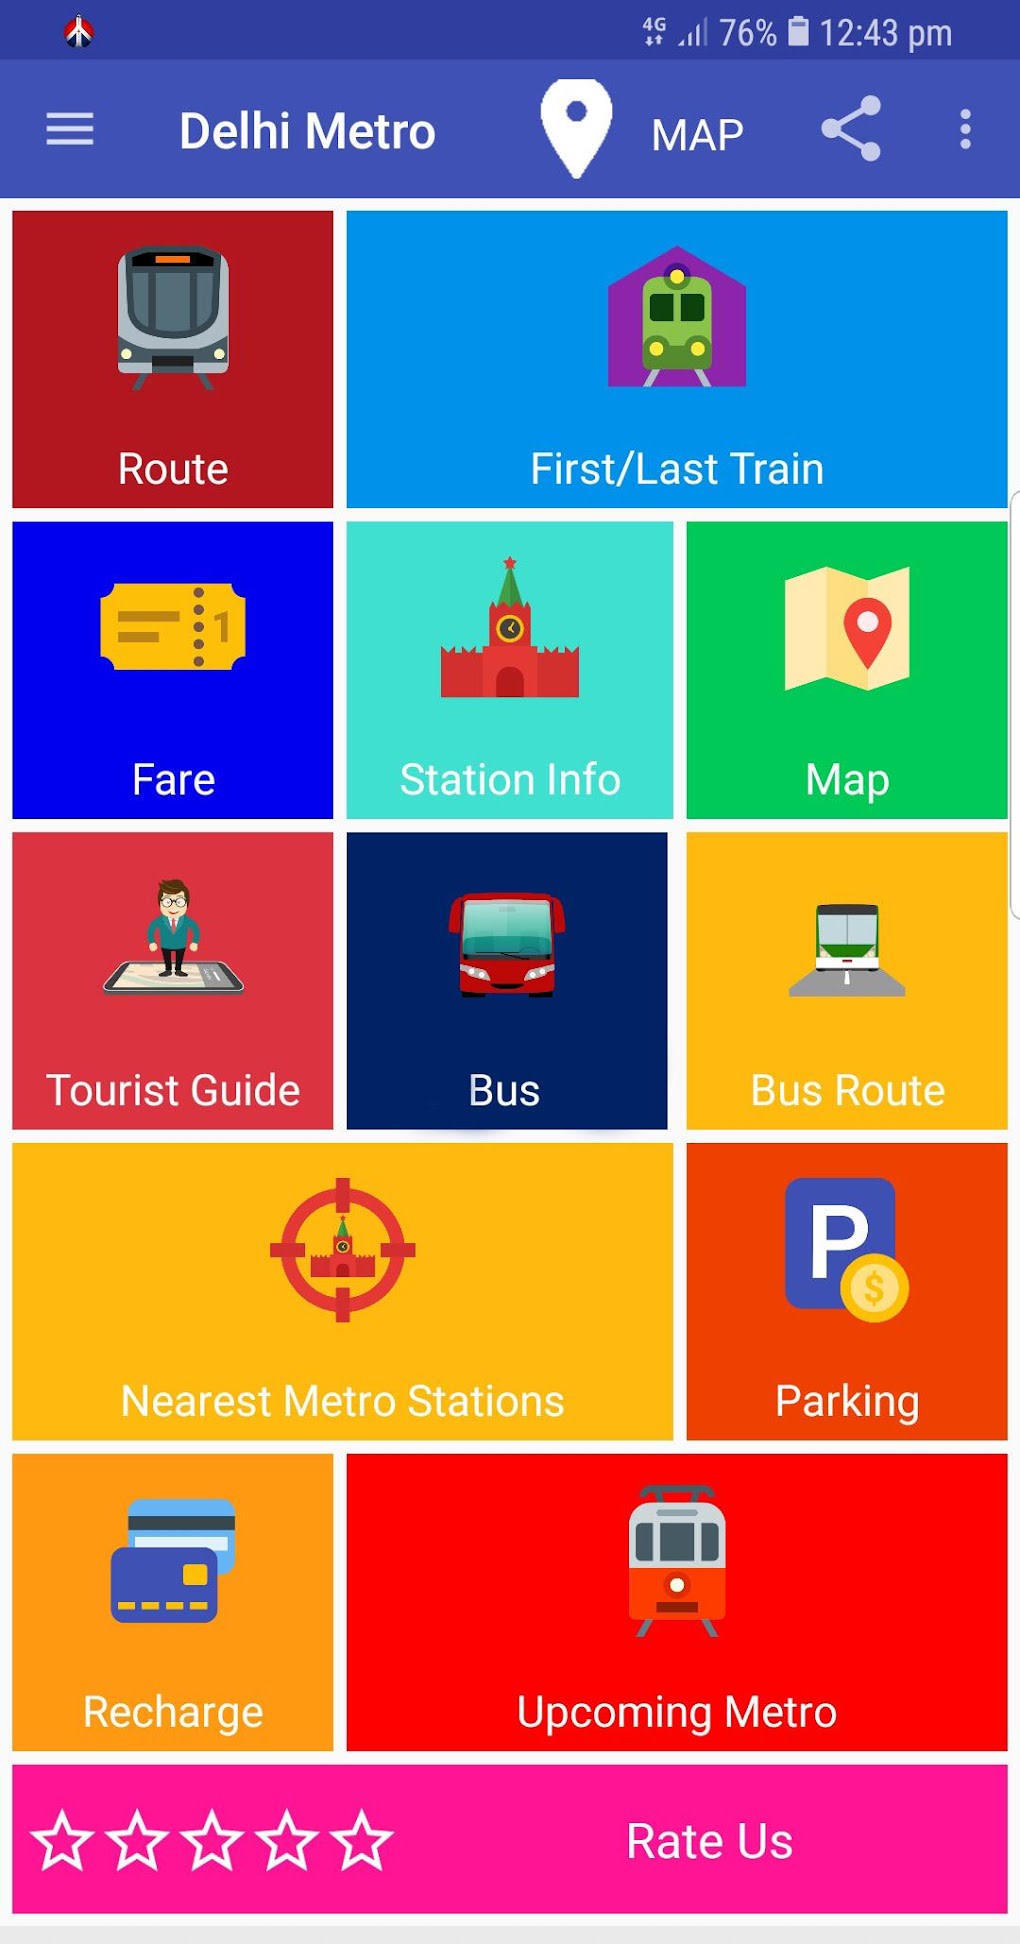 Delhi Metro Route Map And Fare Para Android Descargar